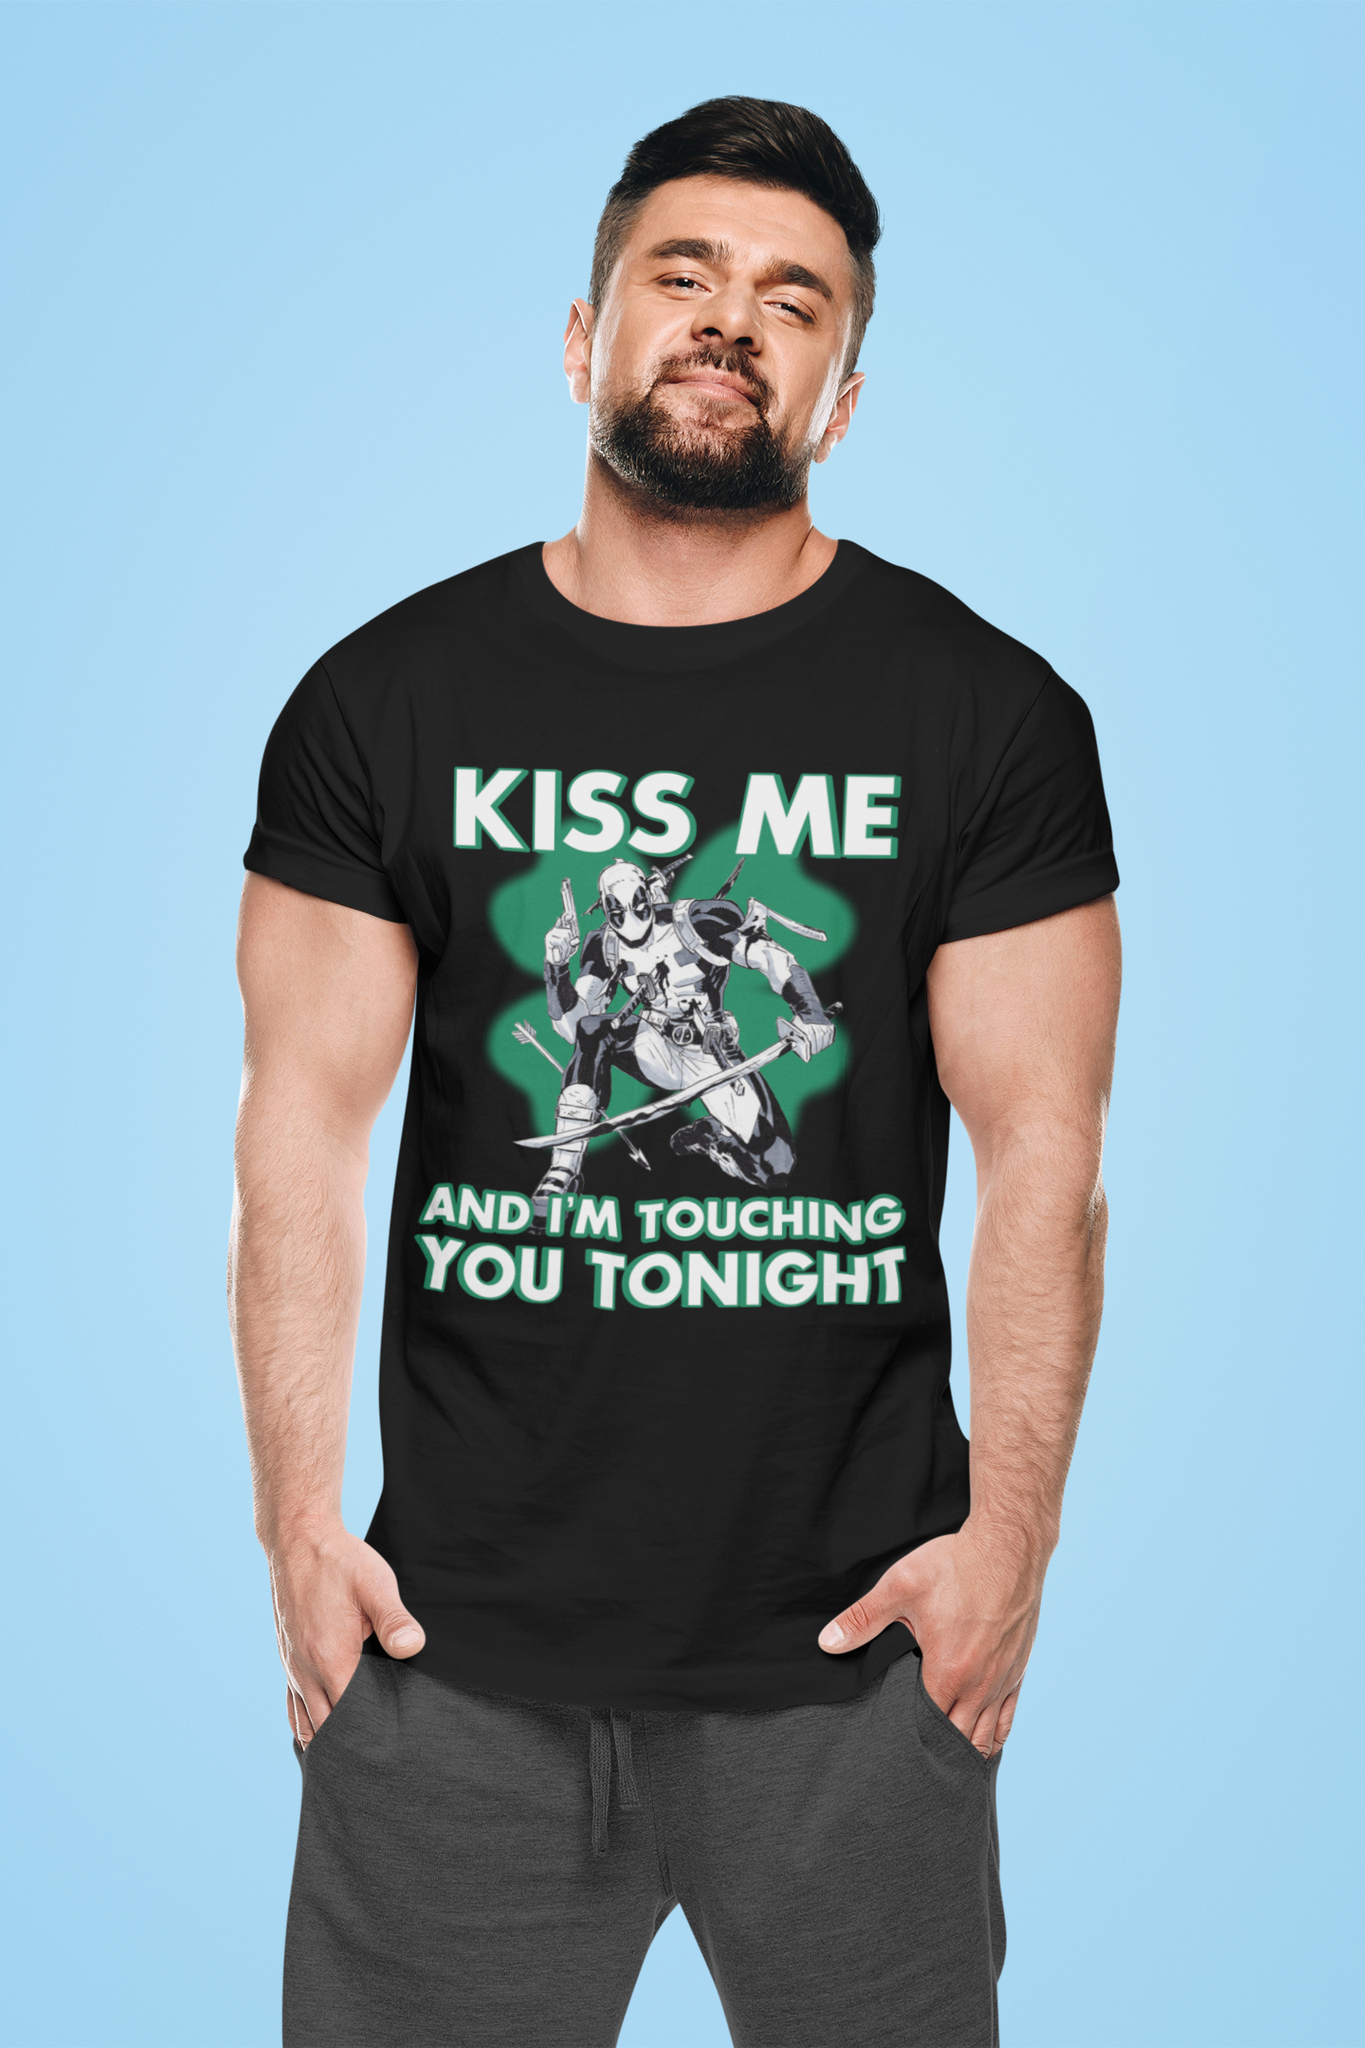 Deadpool T Shirt, Superhero Deadpool T Shirt, Kiss Me Im Touching You Tonight Tshirt, St Patrick Day Gifts